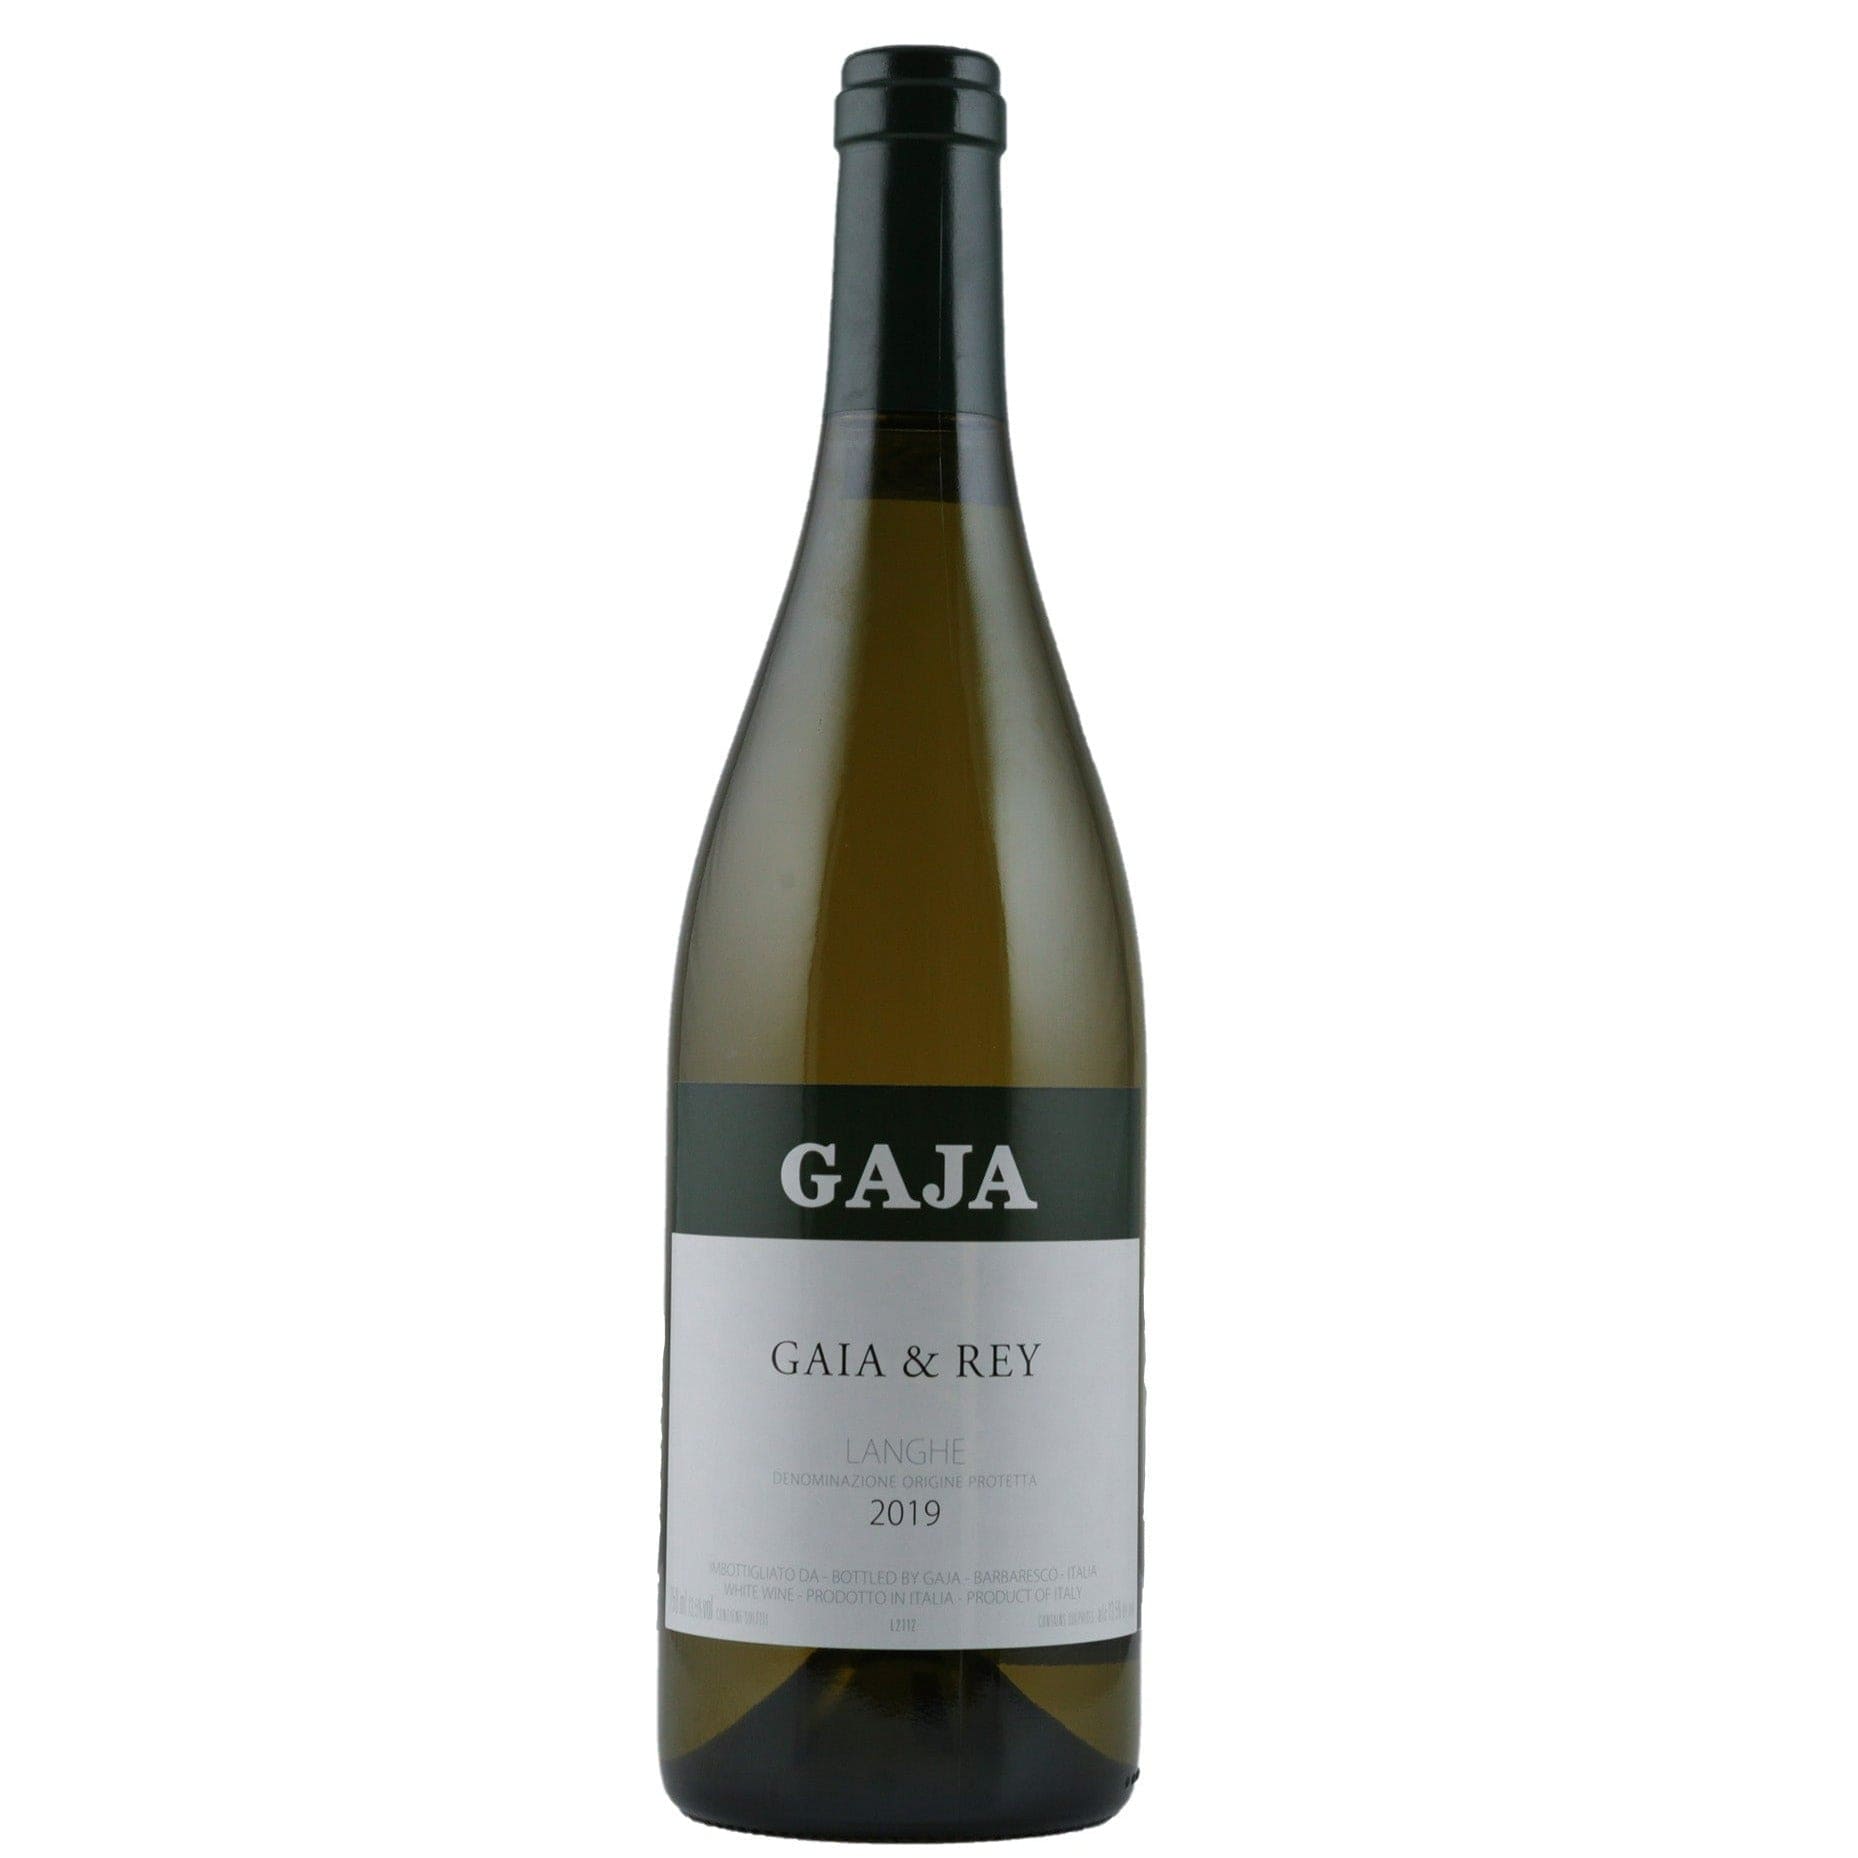 Single bottle of Red wine Gaja, Gaia & Rey, Langhe, 2019 100% Chardonnay